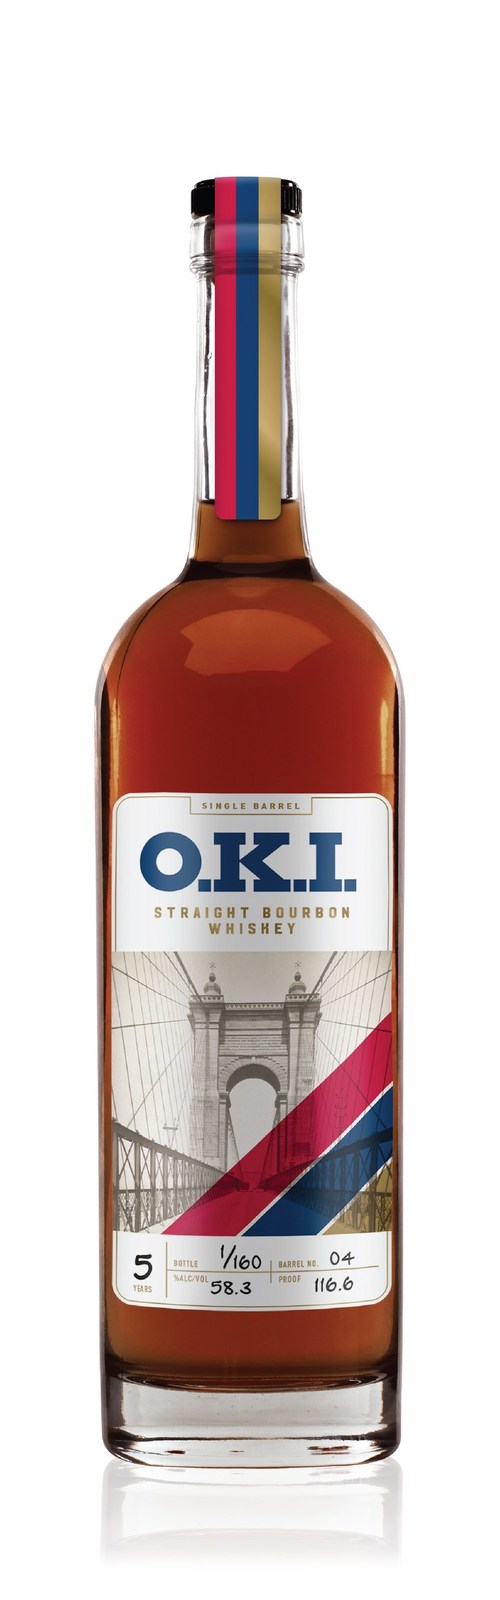 O.K.I. Fall 2020 Launch Bottle